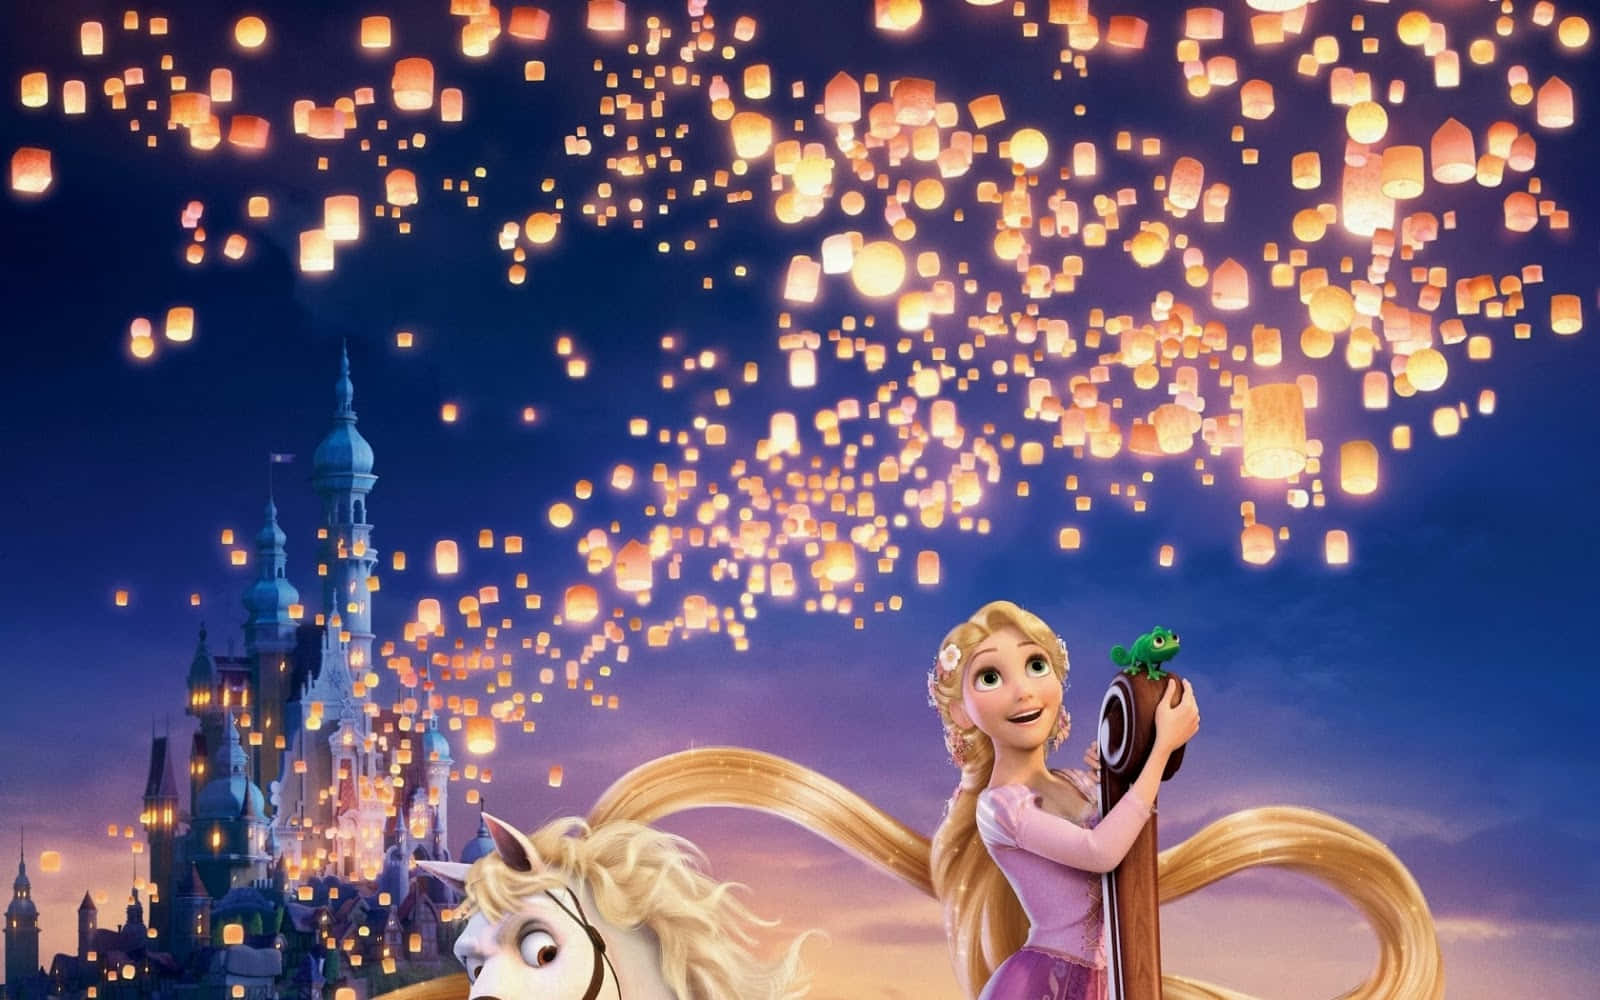 Fairytale princess Rapunzel with her magical golden hair